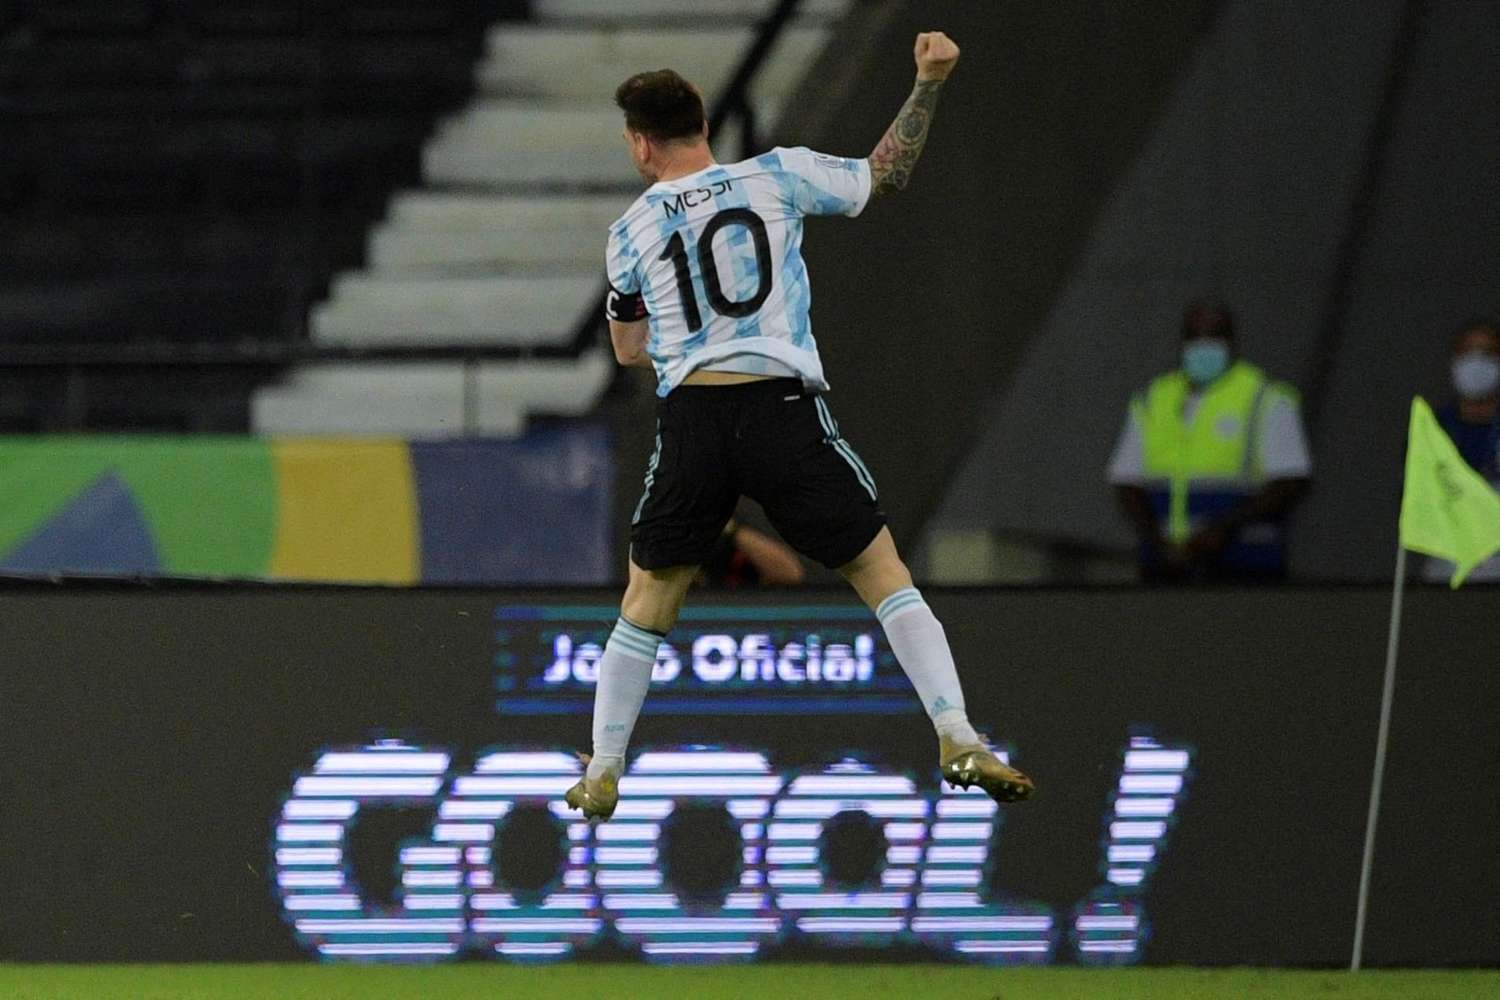 "Faltó tranquilidad para ganar", afirmó Messi